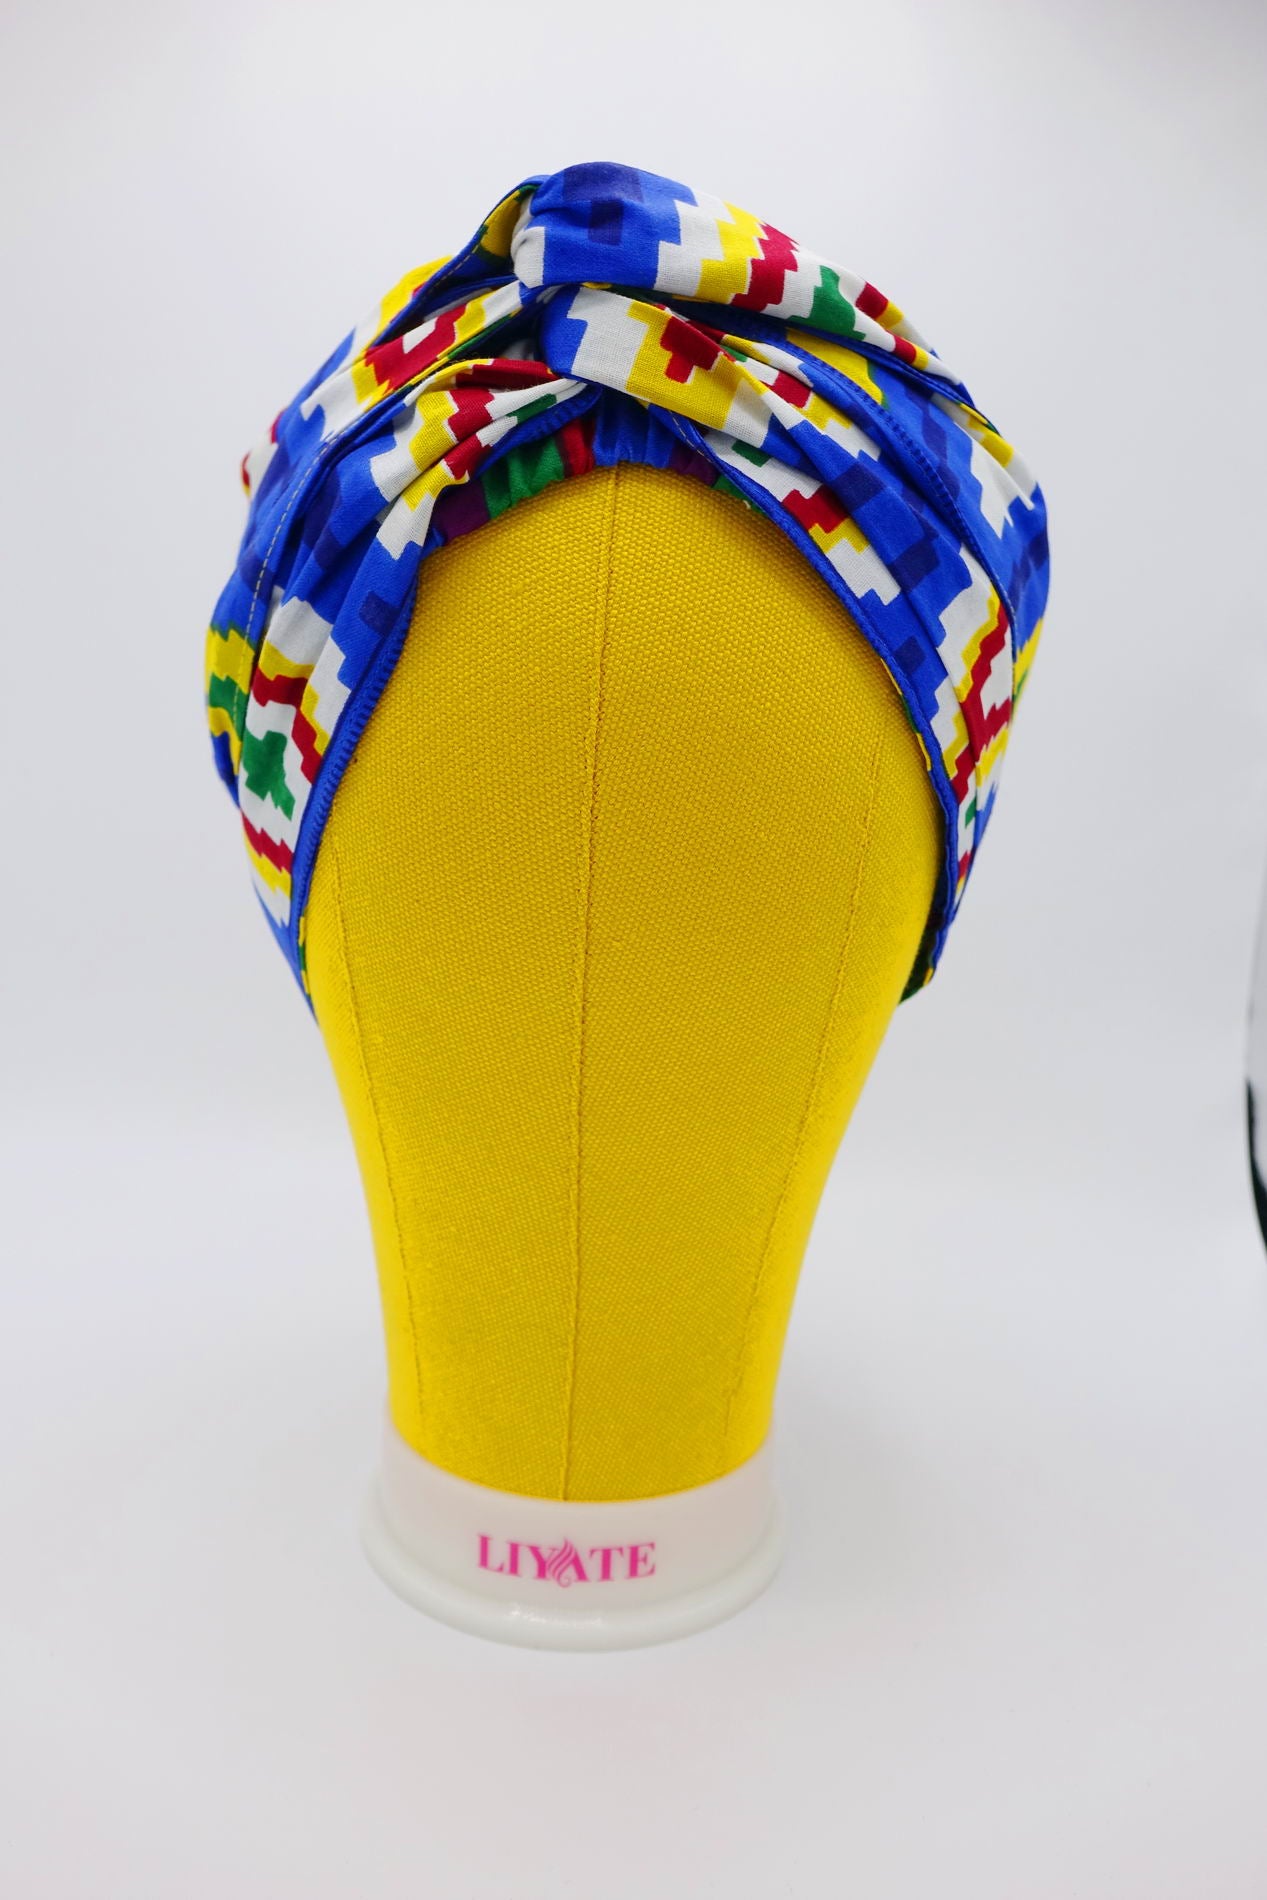 Satin Lined Bonnet Head Wrap - Kente - Geometric Shapes: Blue, Red, Yellow, White